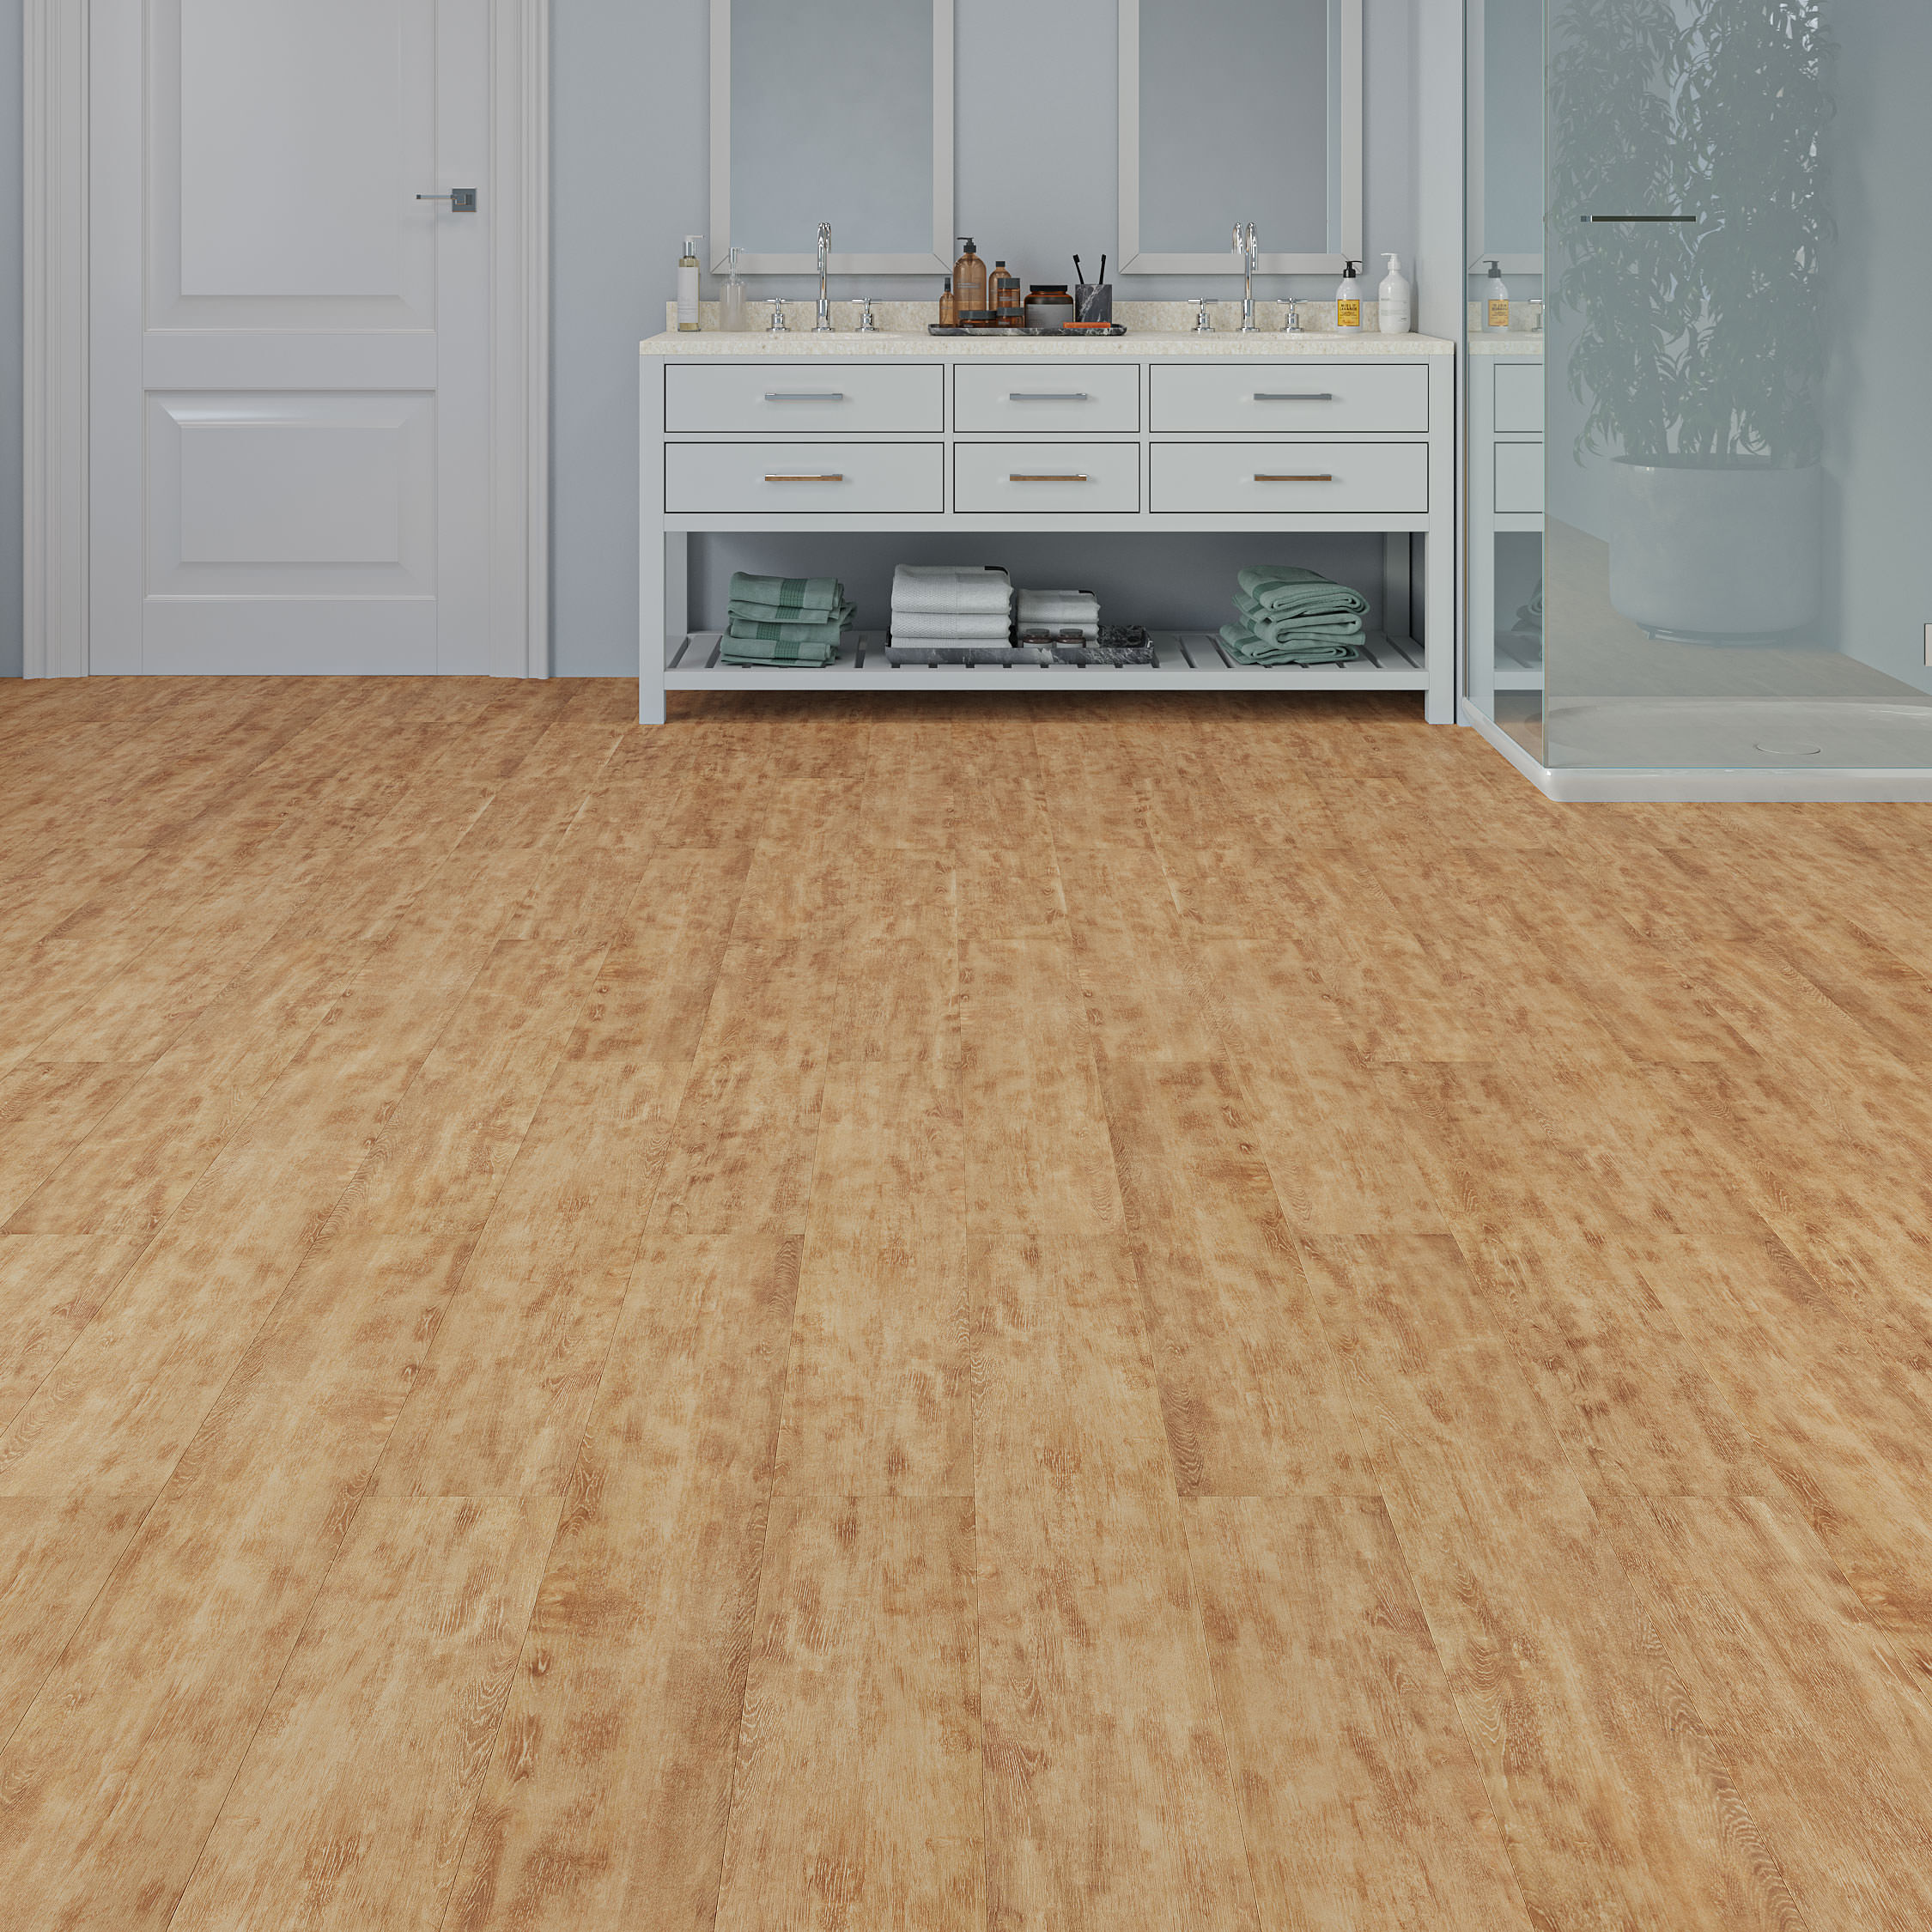 Luxury Flooring Wood Effect Light Sawmill Oak Luxury LVT Vinyl Tile Wood Flooring - 2.5mm Thick